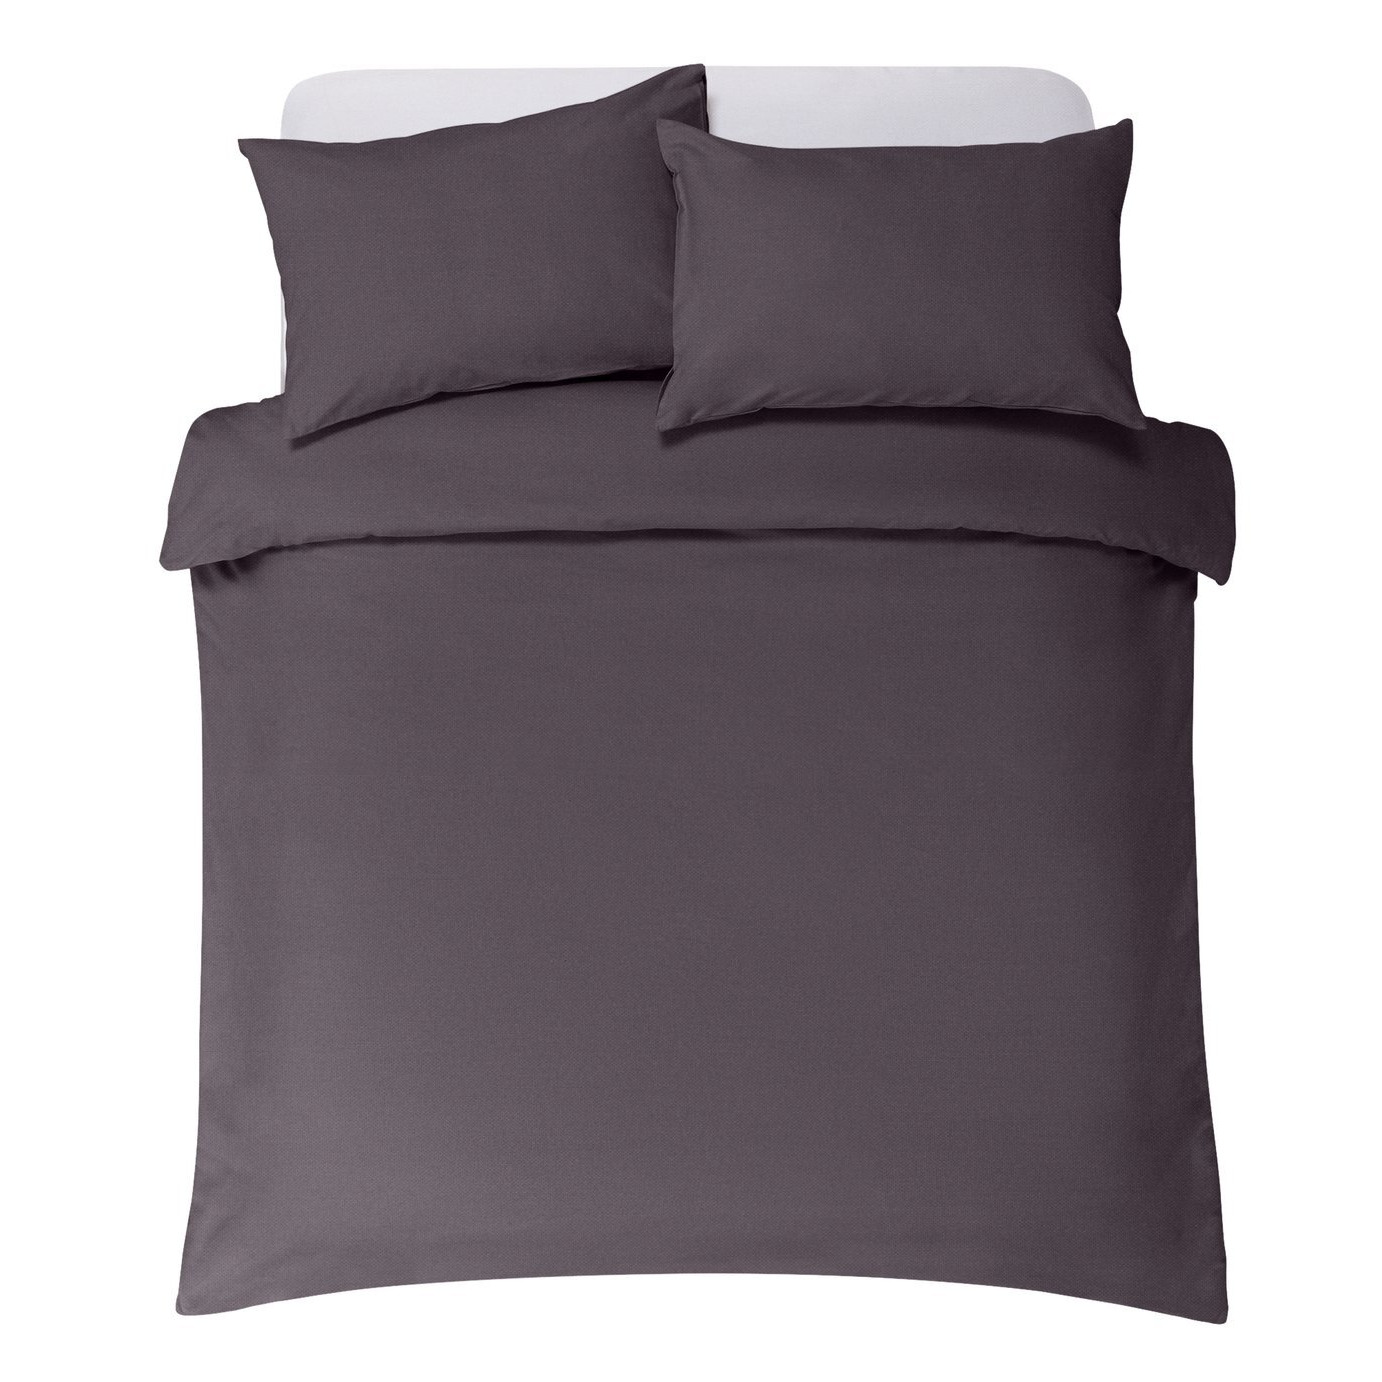 Argos Home Brushed Cotton Plain Charcoal Bedding Set -Double - image 1